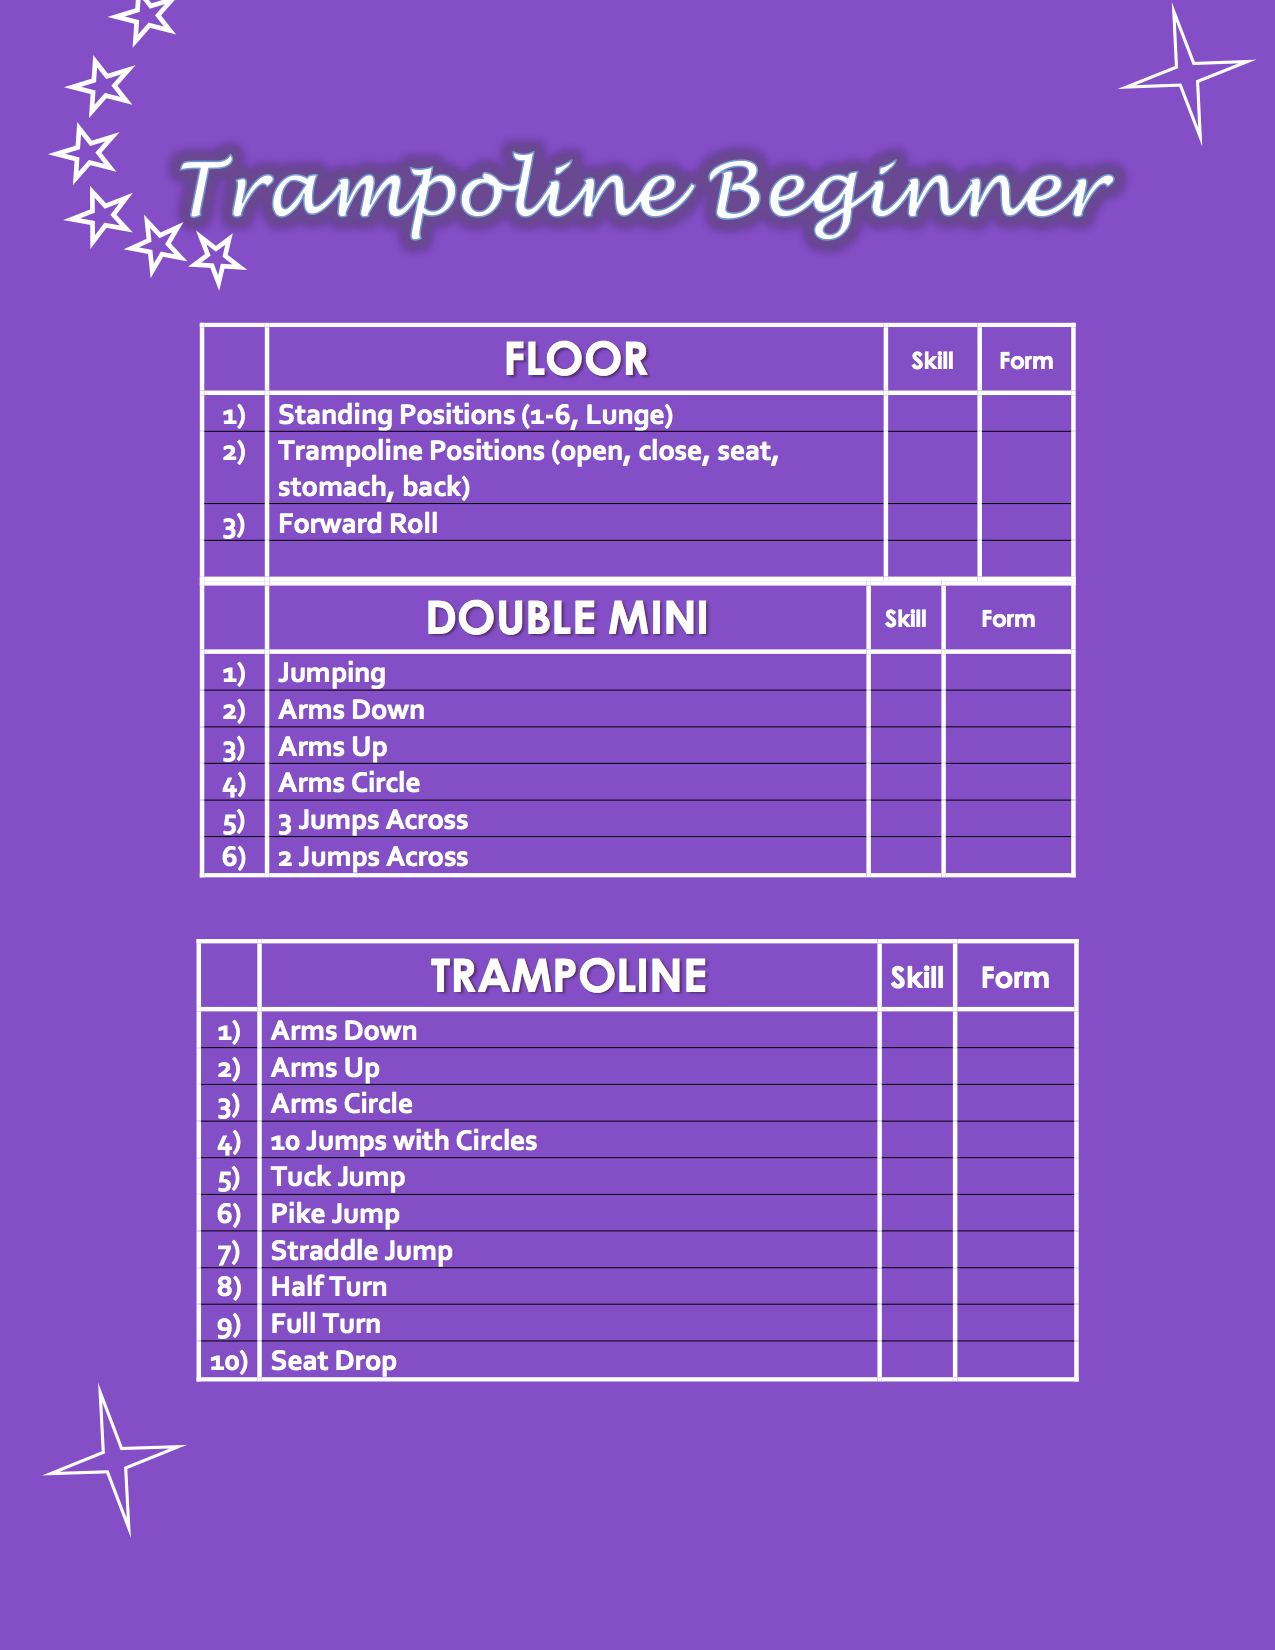 Trampoline Beginner